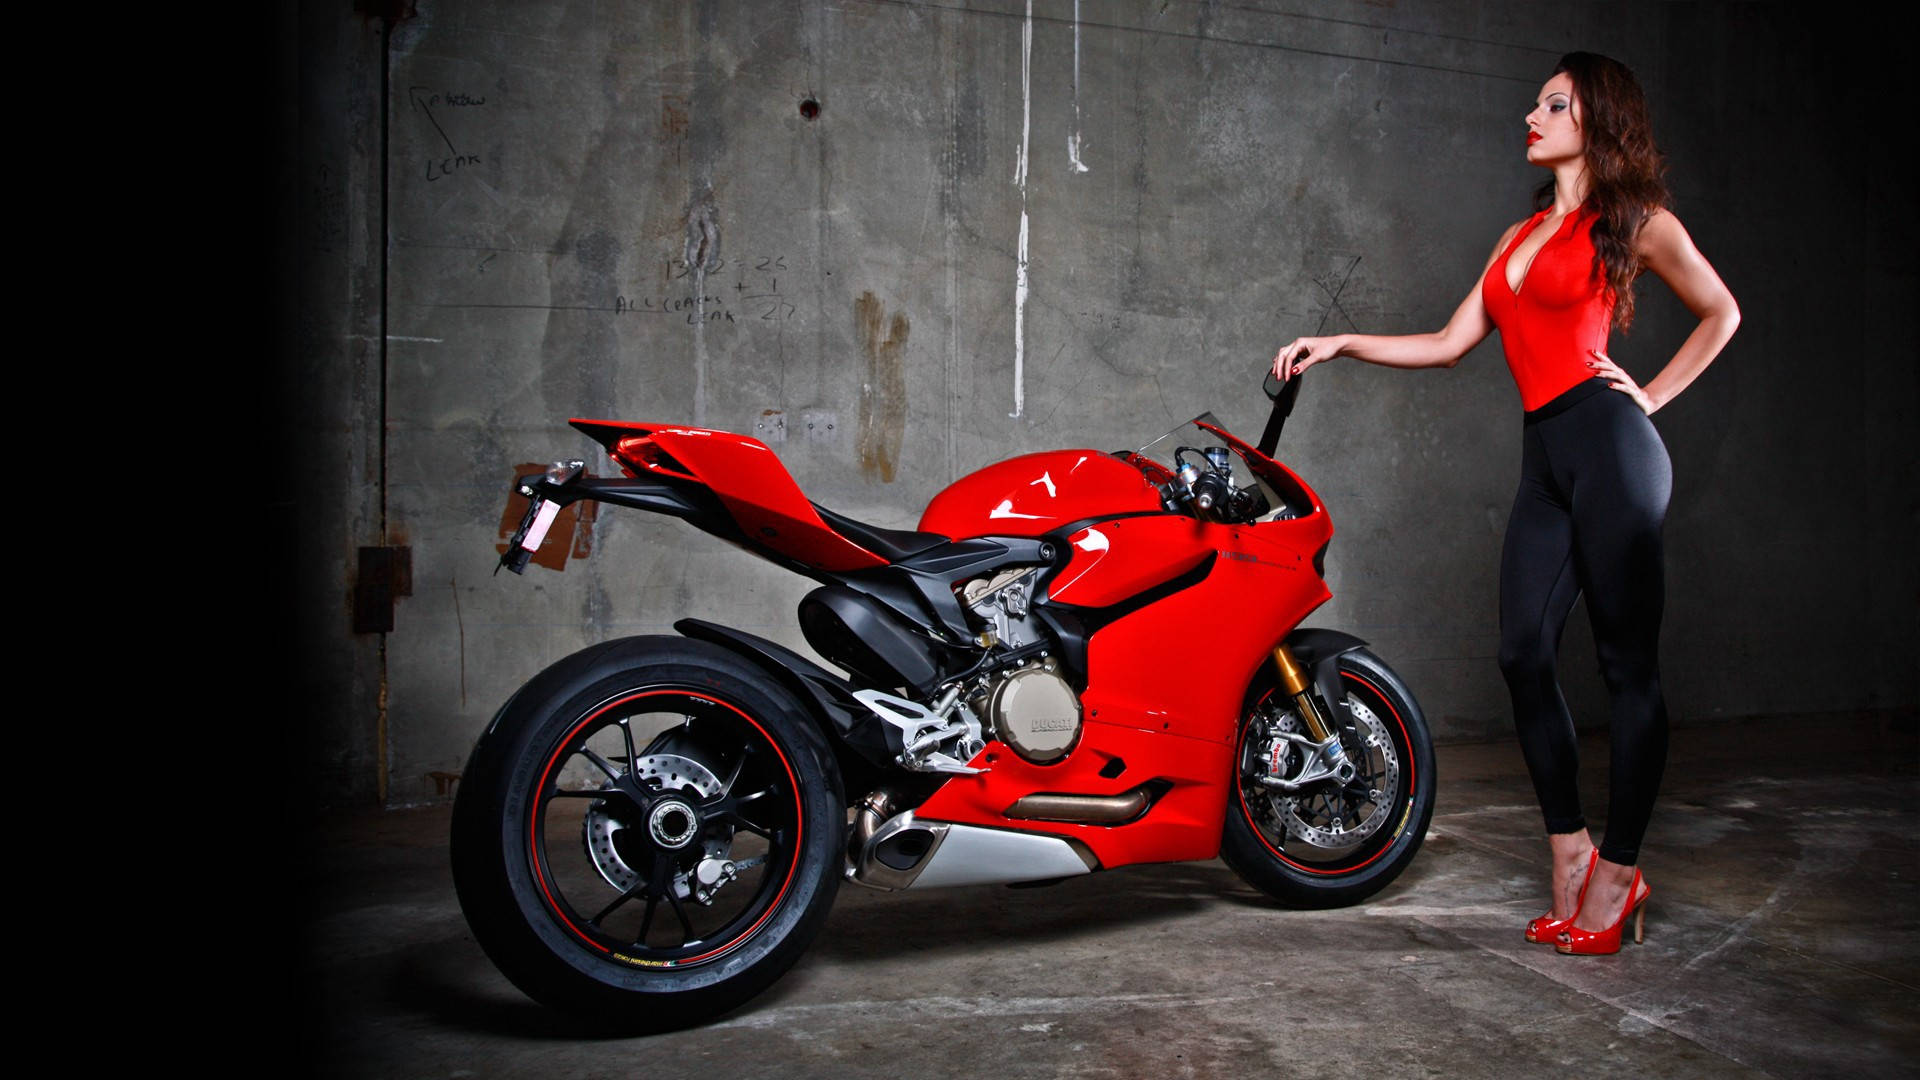 Ducati 1199 Panigale Cool Bike With Model Wallpaper